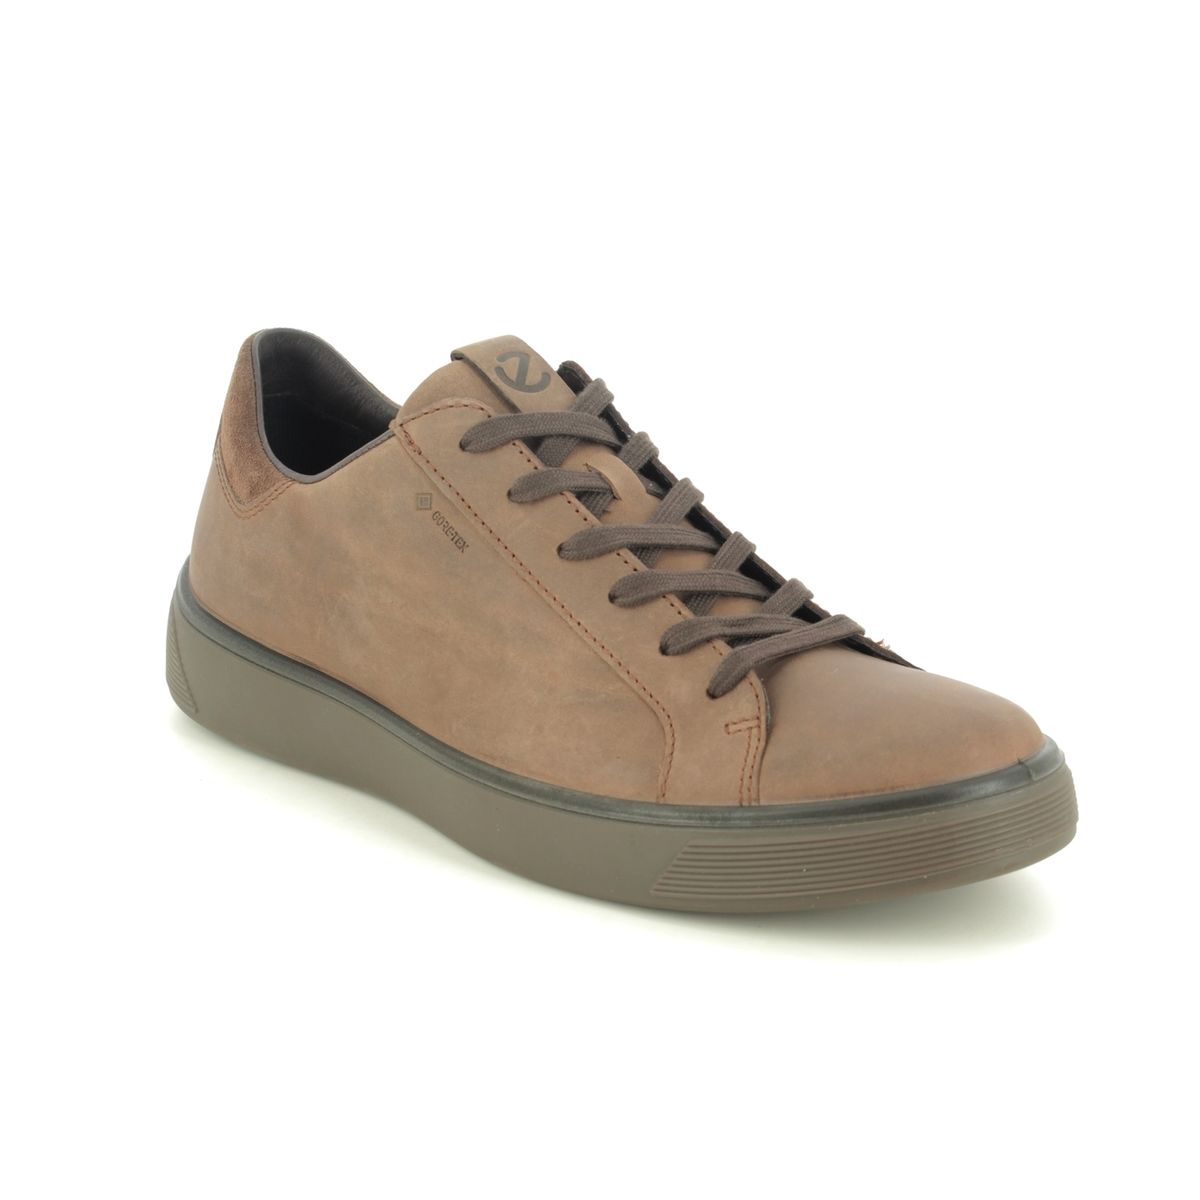 Ecco Street Tray Gtx Brown Nubuck Mens Comfort Shoes 504574-55778 In Size 41 In Plain Brown Nubuck